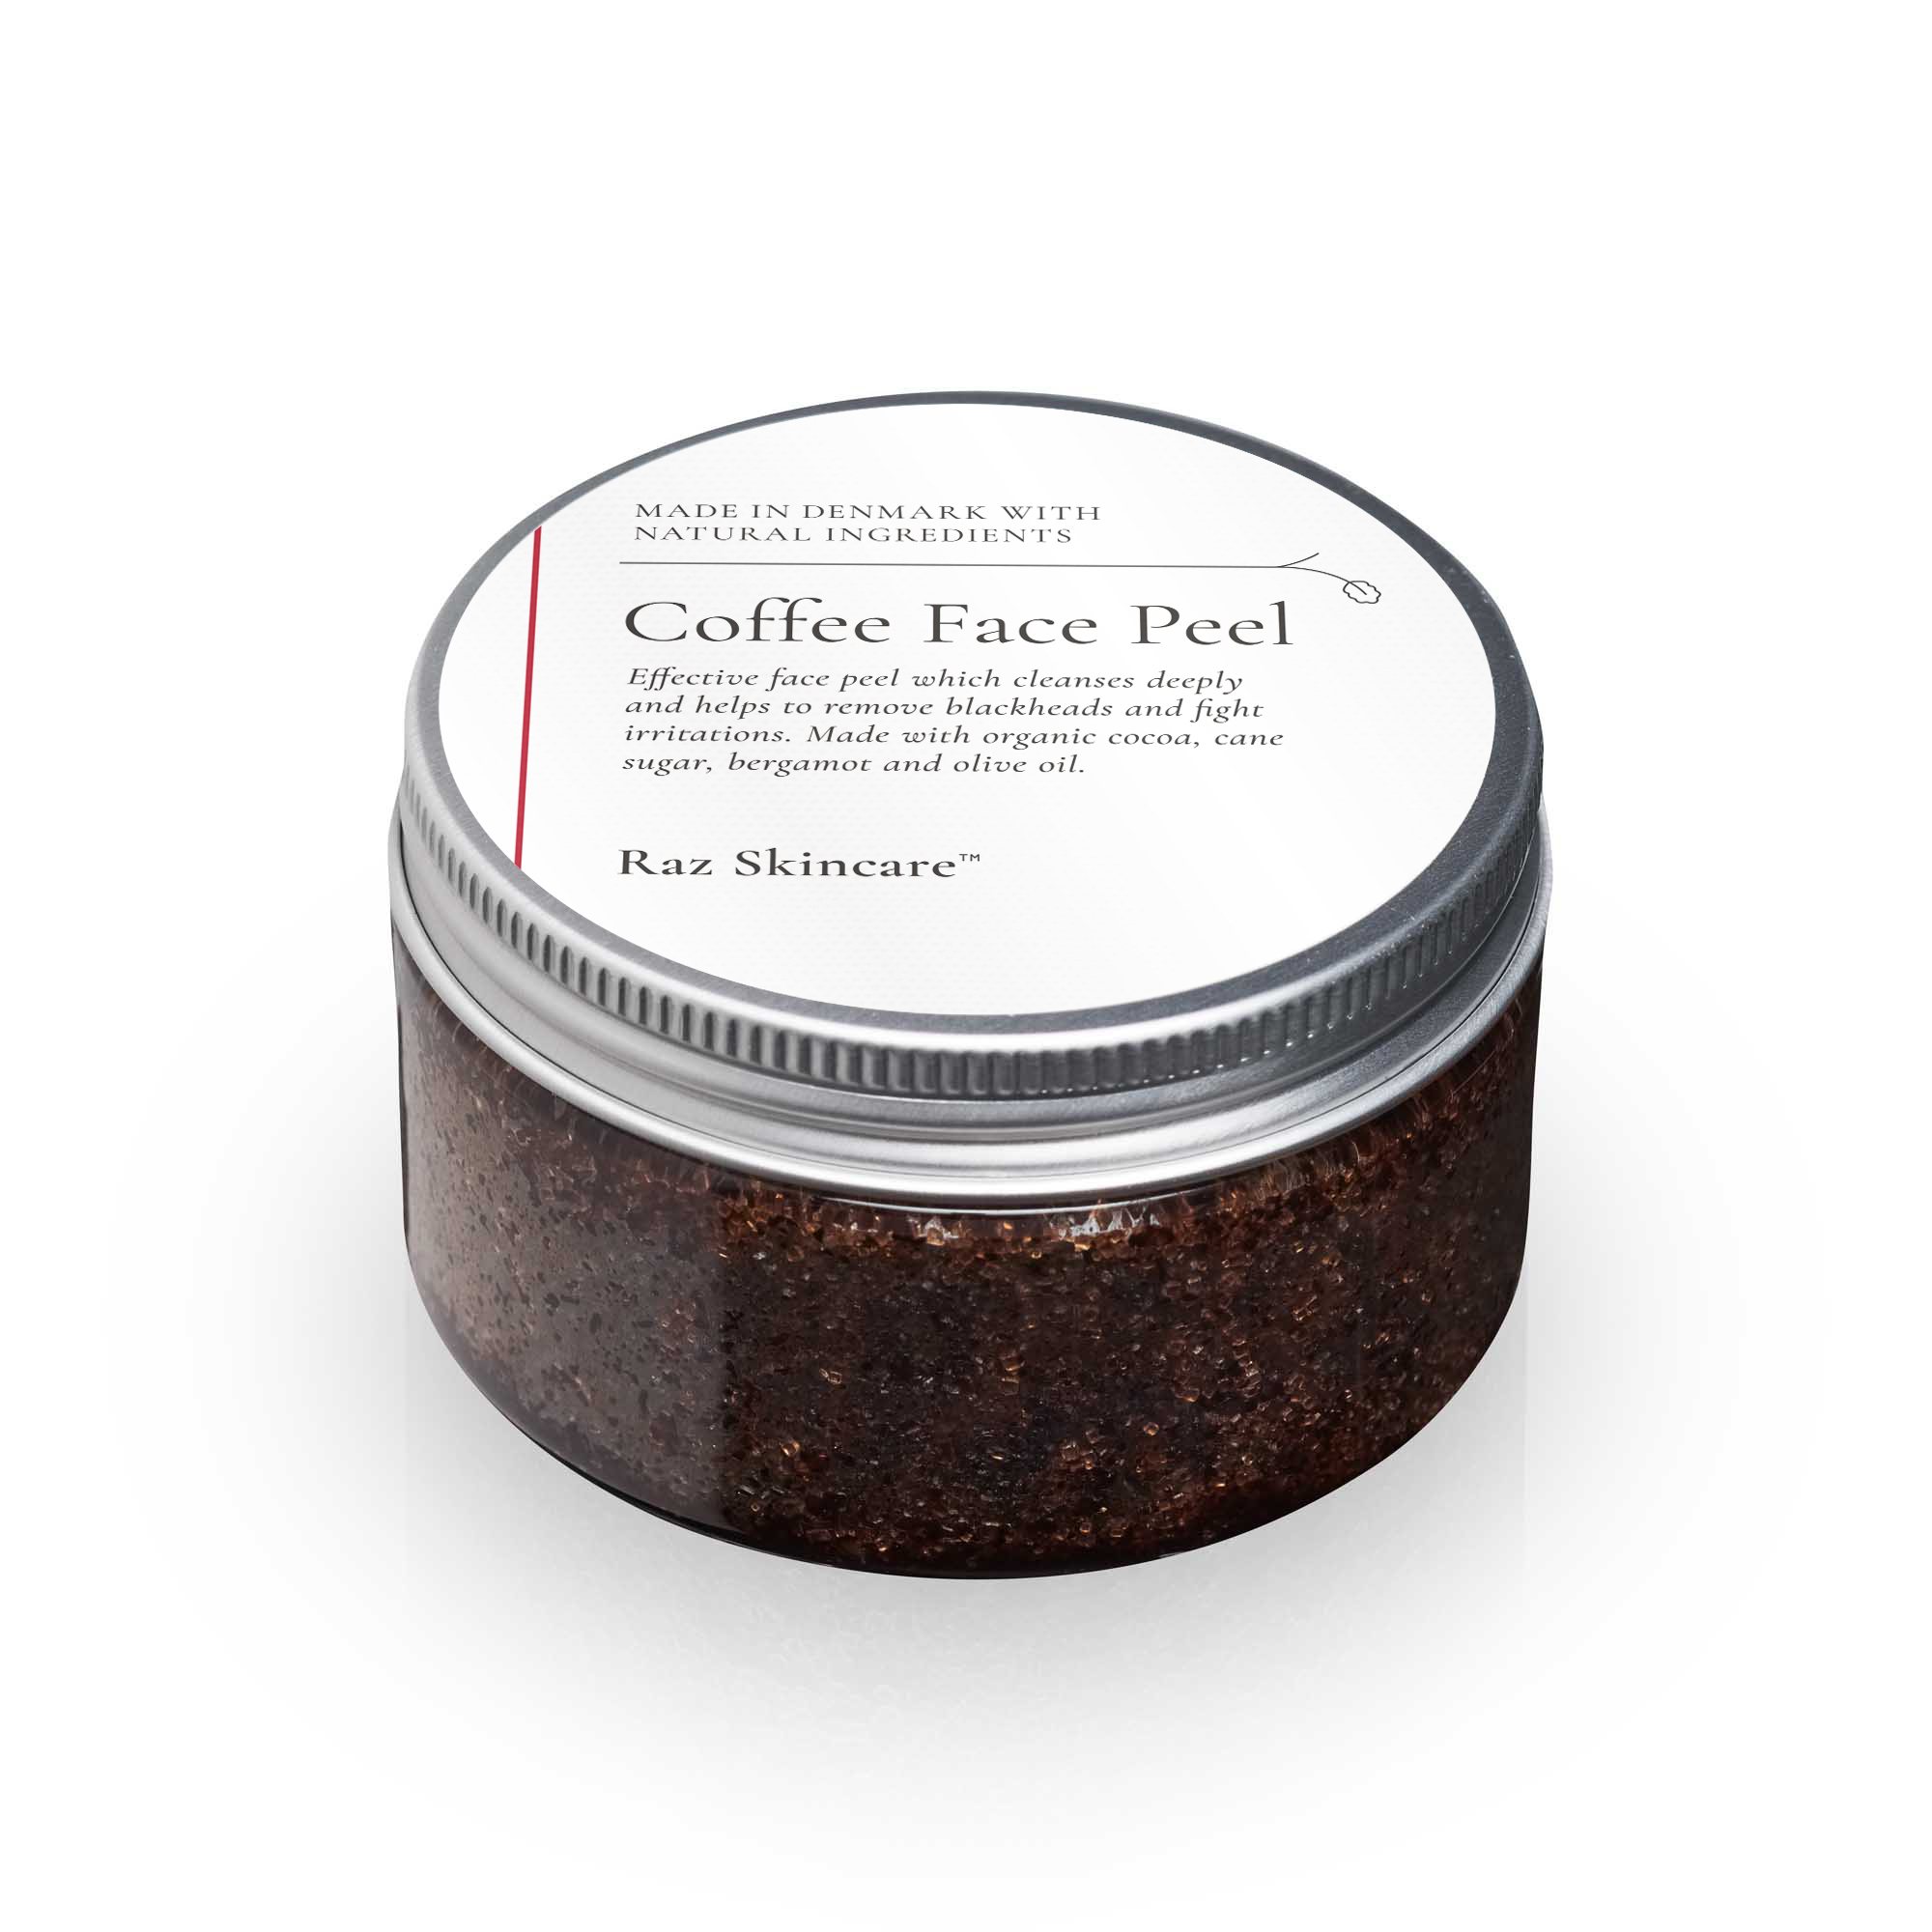  Coffee Face Peel